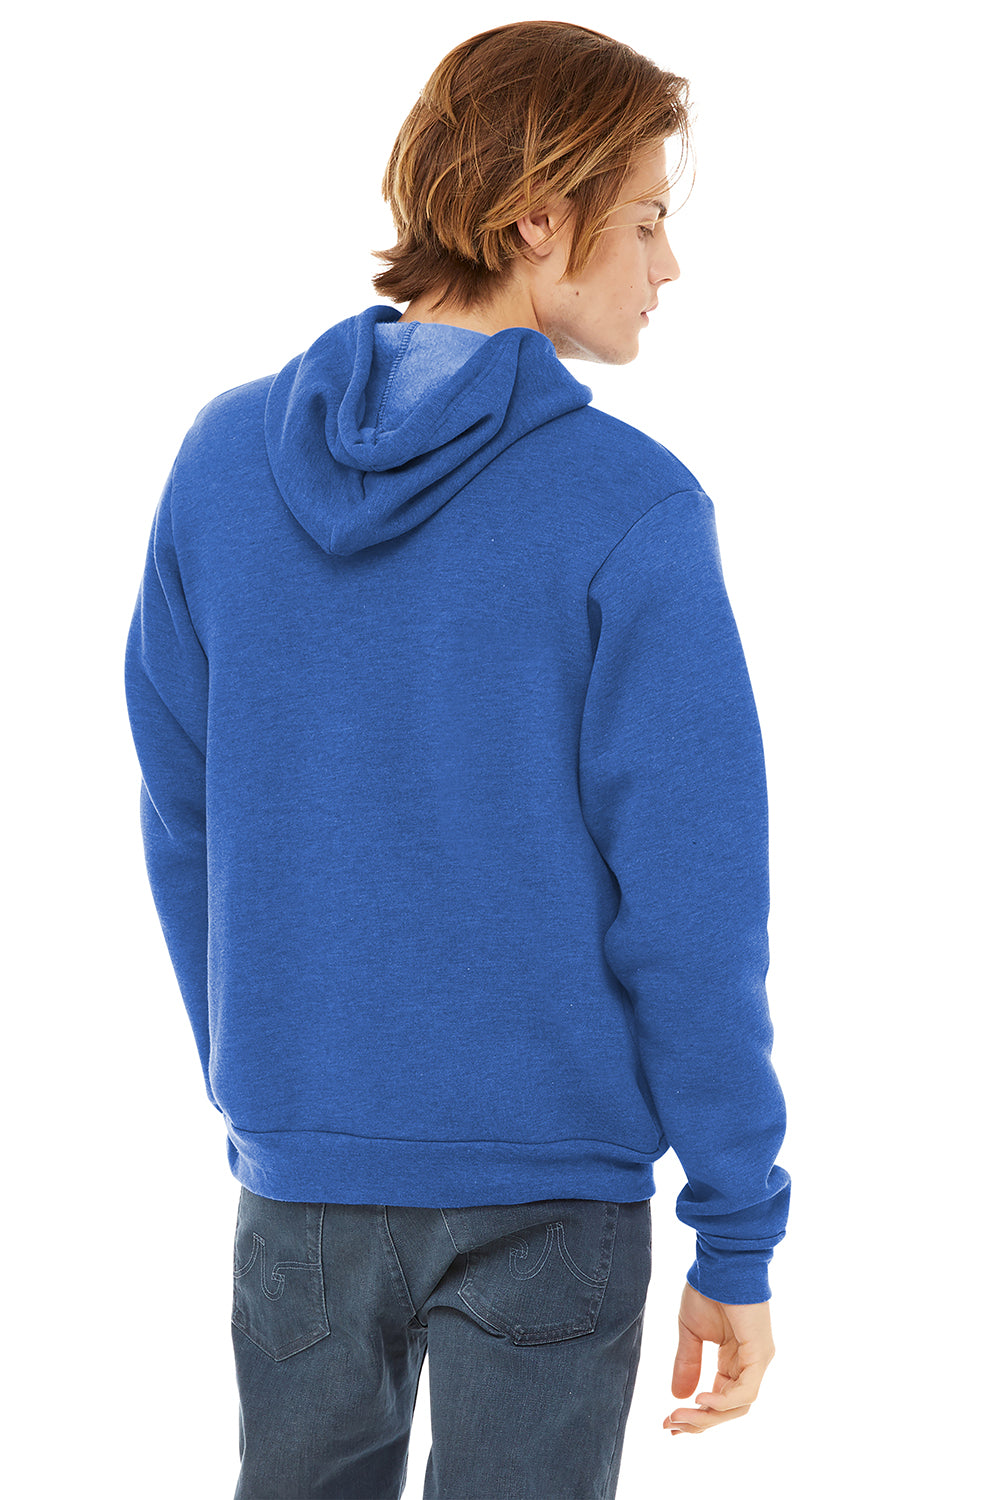 Bella + Canvas BC3719/3719 Mens Sponge Fleece Hooded Sweatshirt Hoodie Heather True Royal Blue Model Back